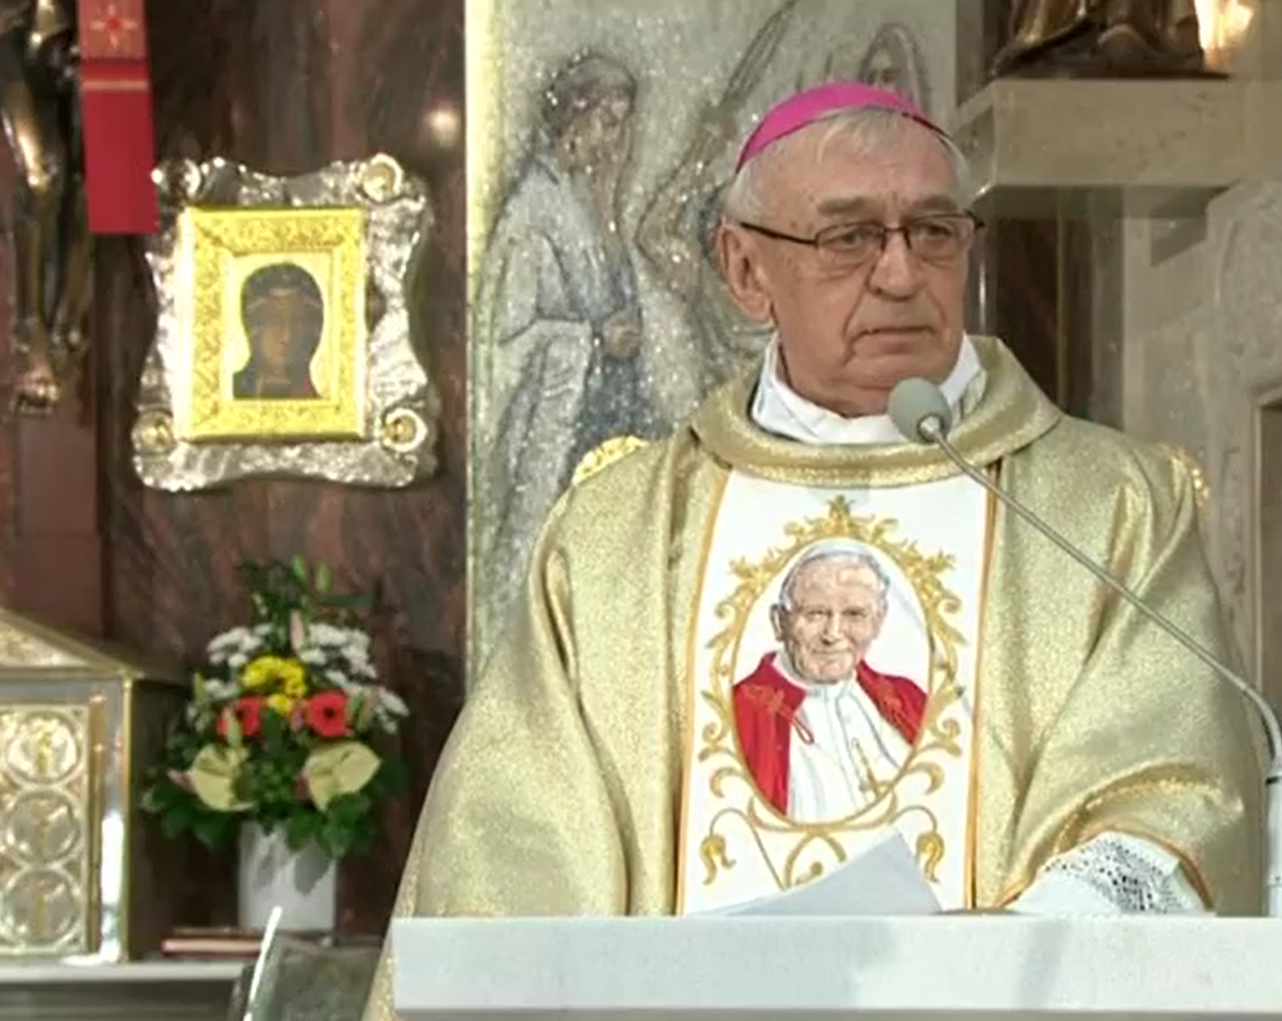 Mass presided over by H.E. Bishop Andrzej Suski, Senior Bishop of Torun Diocese.. 18.05.2020